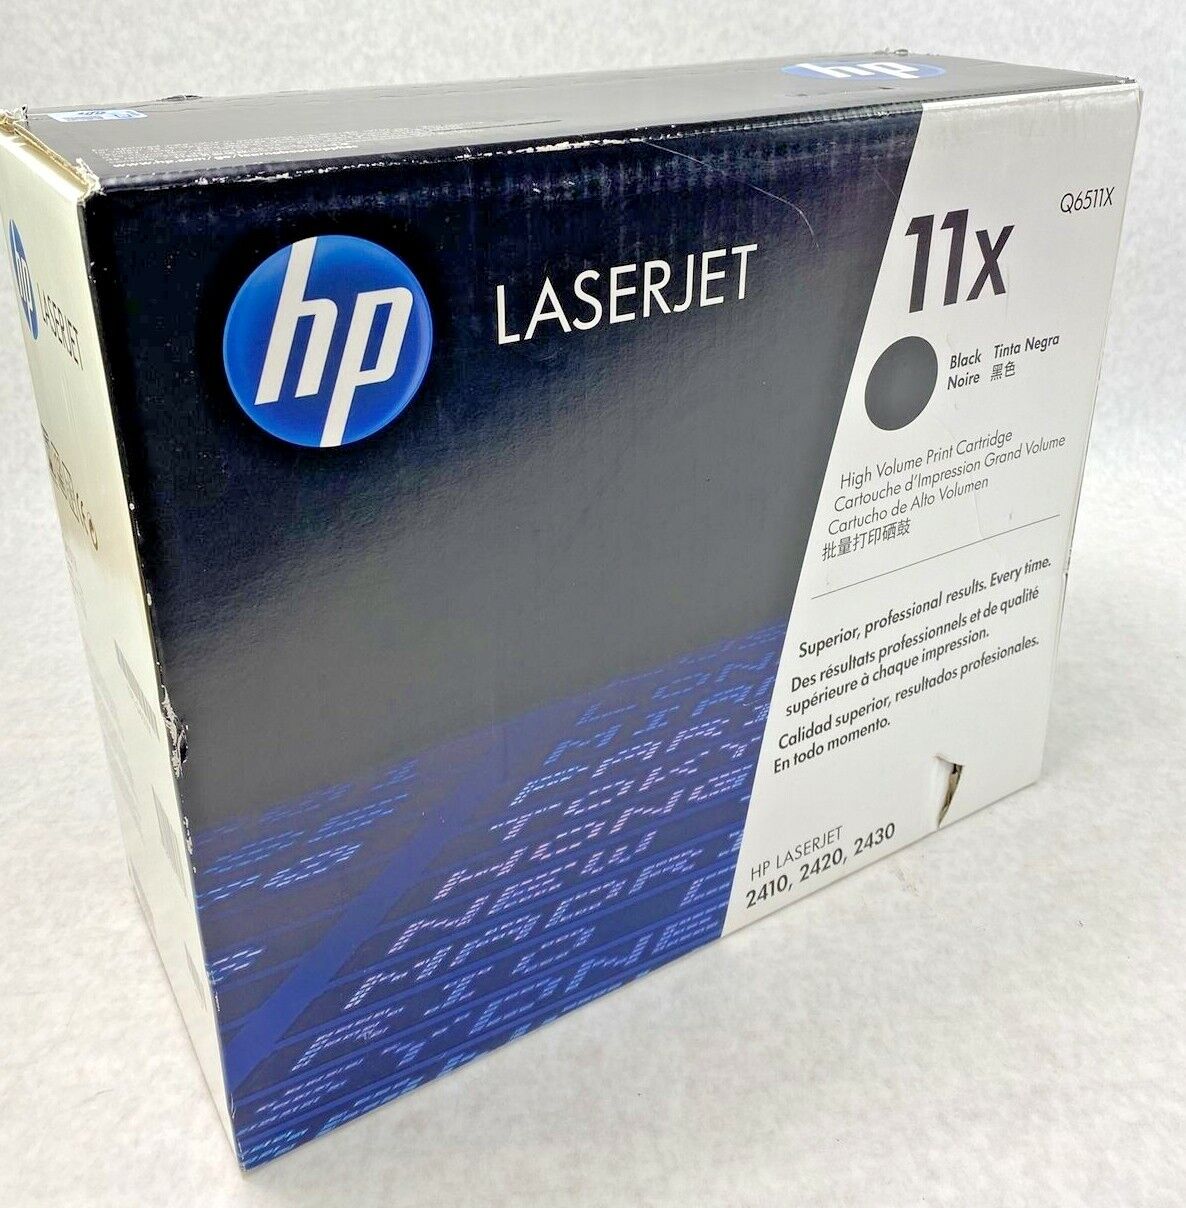 HP Q6511X 11x High Volume genuine LaserJet 2430 2410 2420 toner cartridge Black